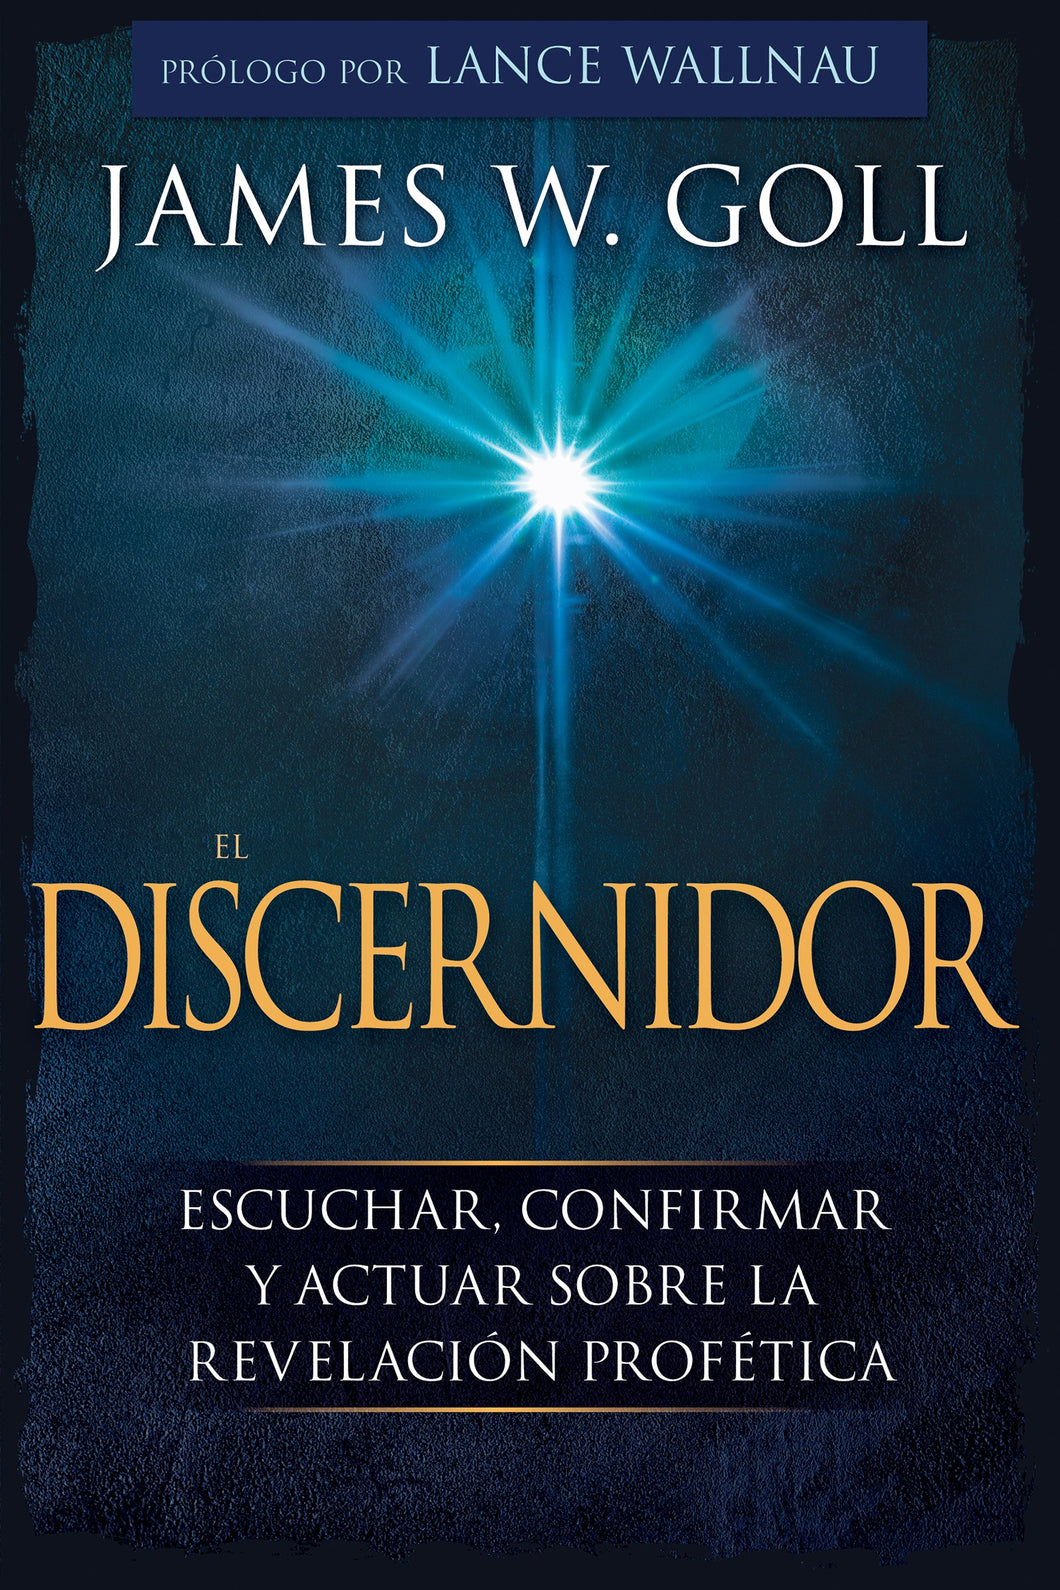 Spanish-Discerner